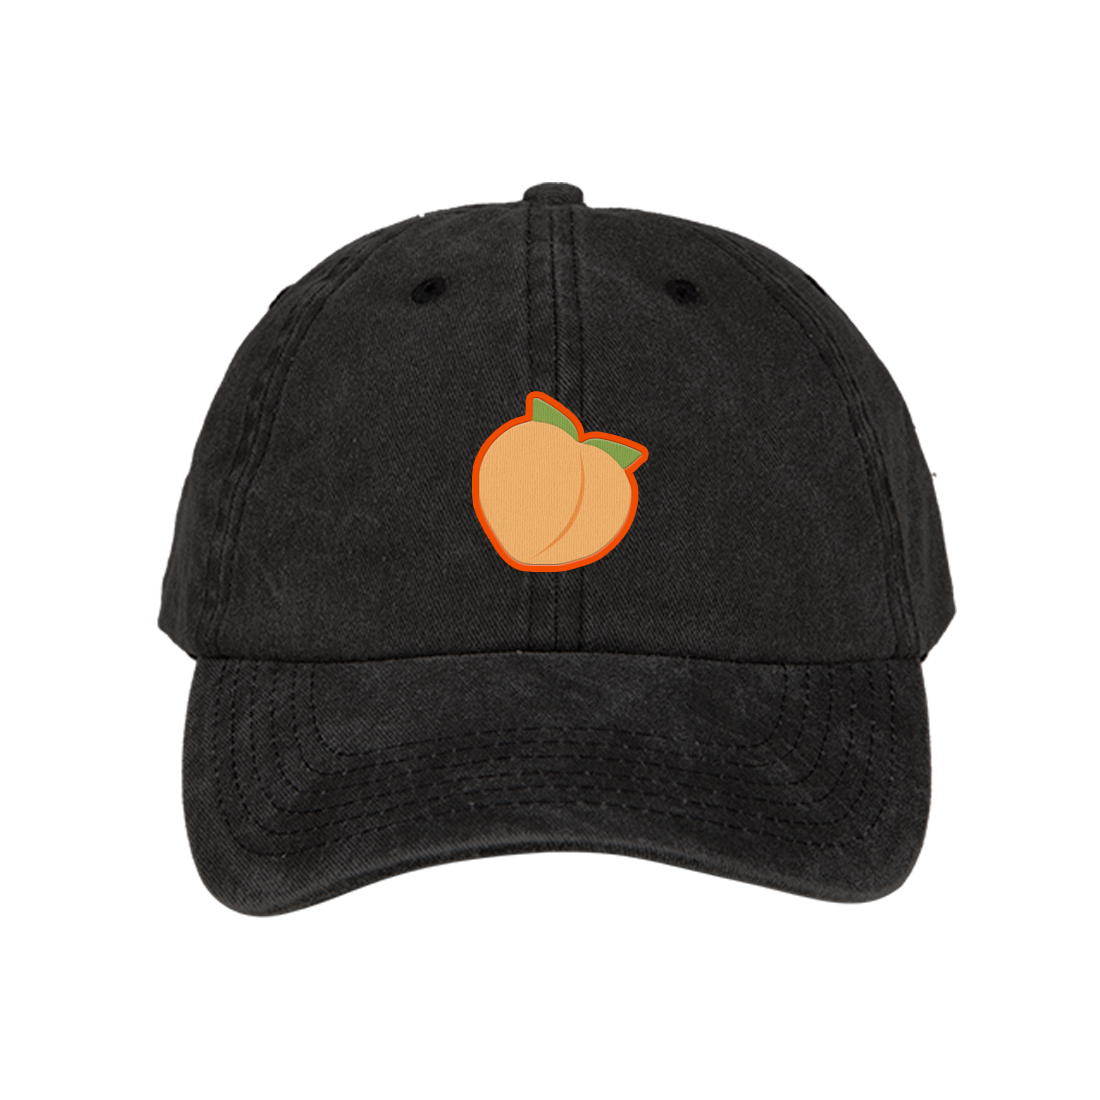 justin bieber - Peaches Hat